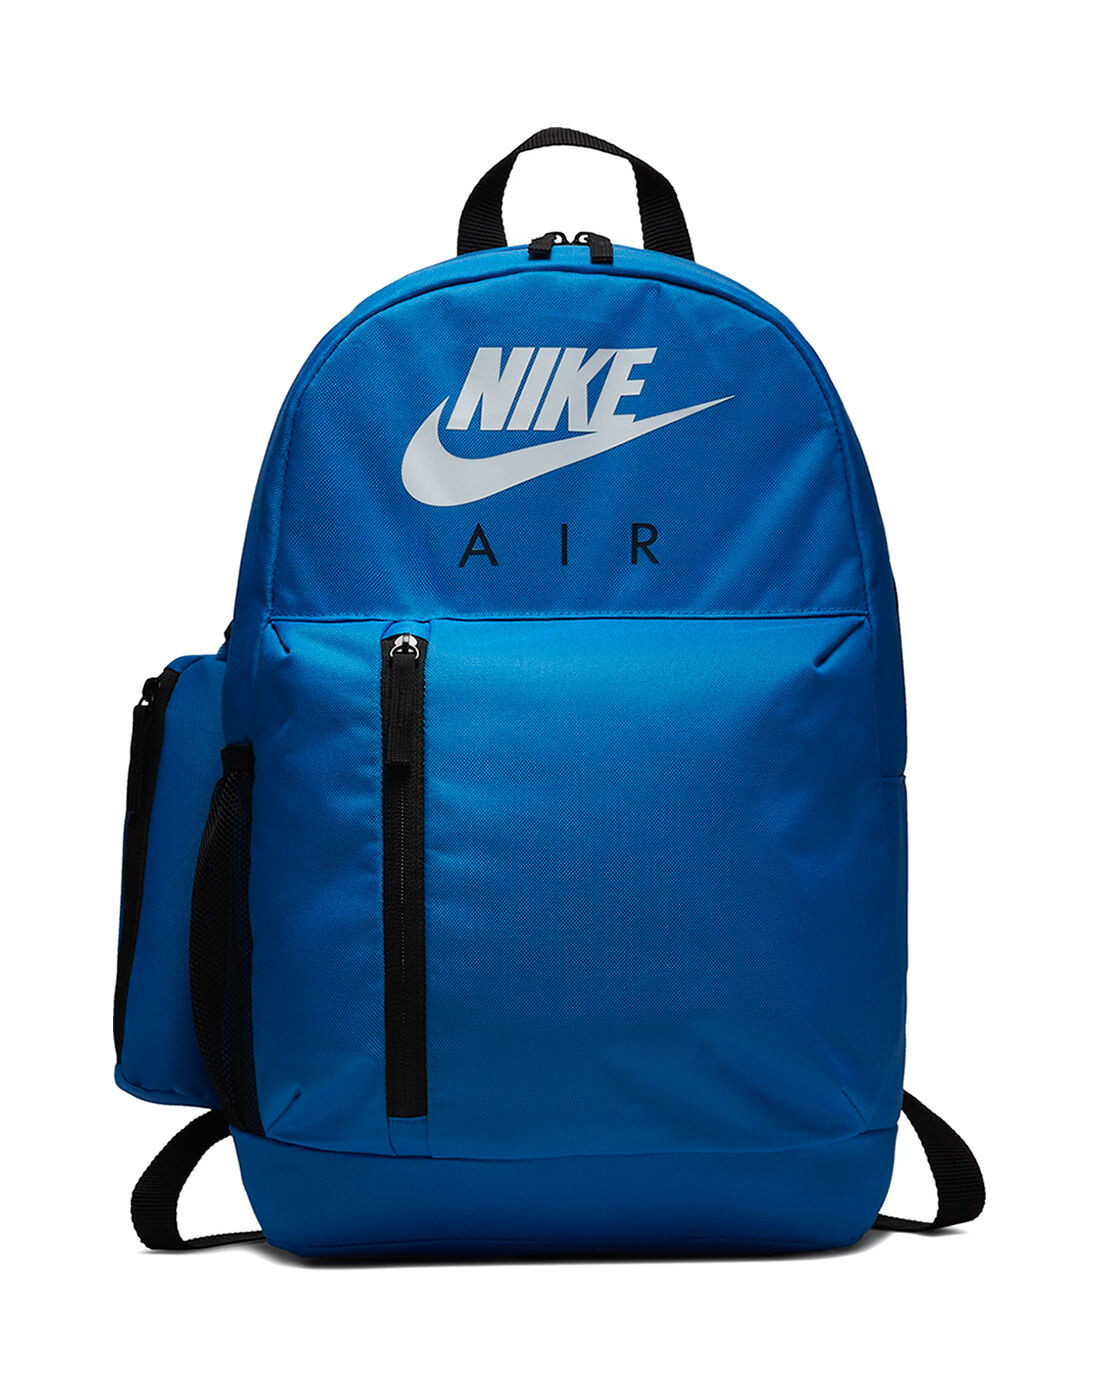 Blue Nike Air School Bag | Life Style 